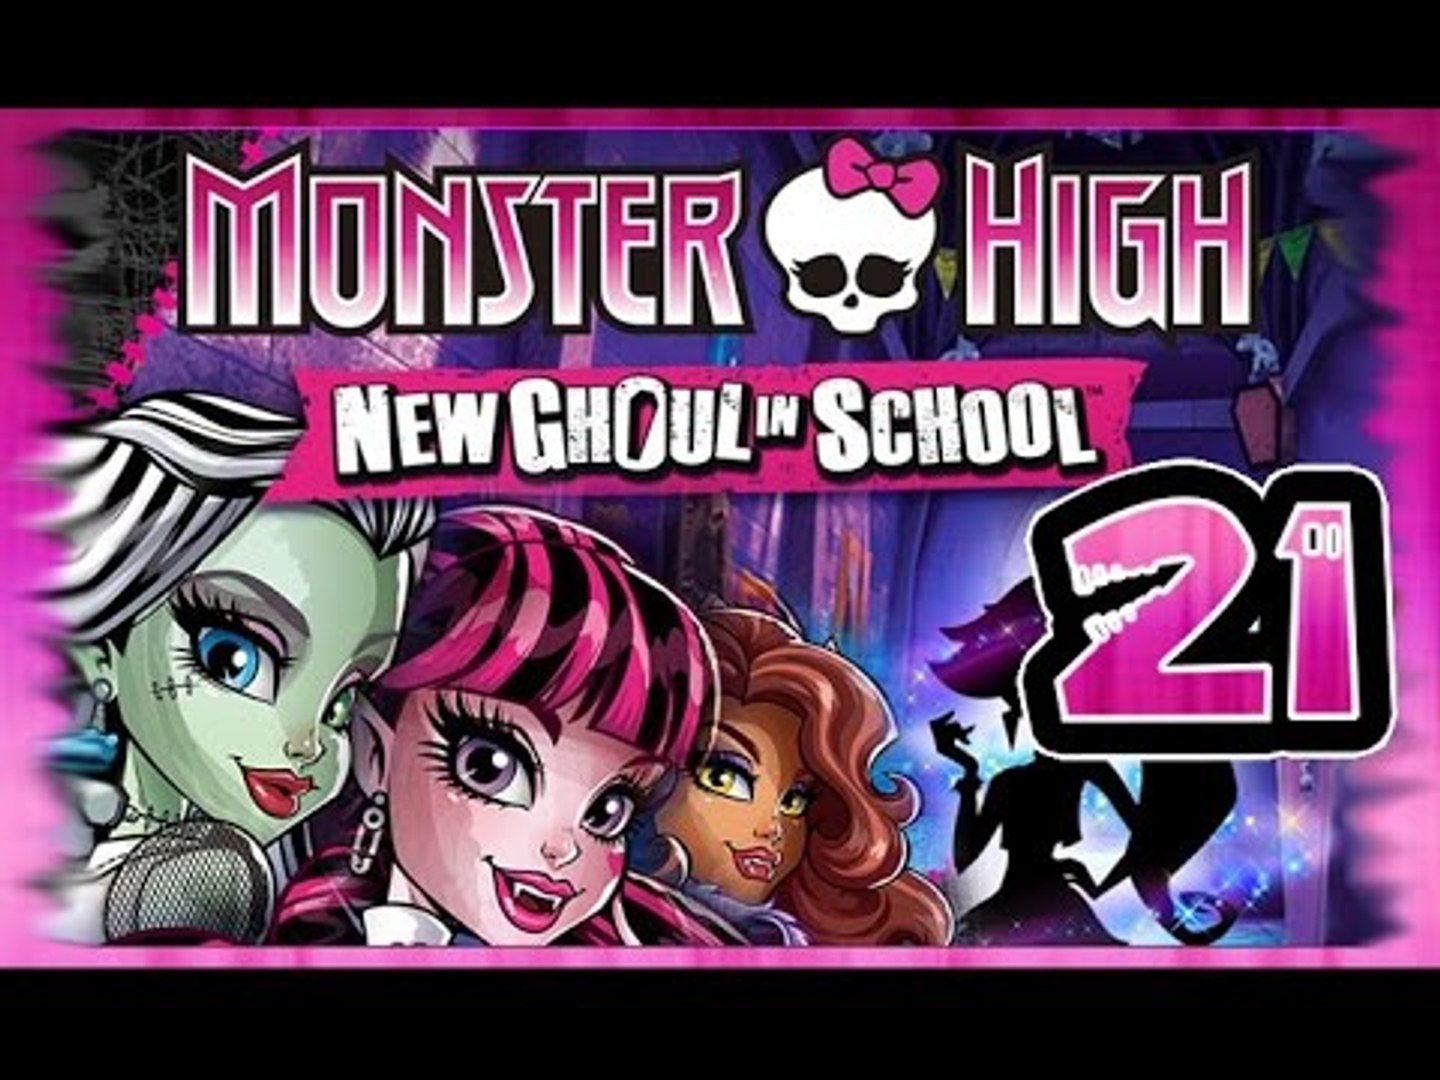 New ghoul school. Xbox 360 Monster High. Игра Monster High New Ghoul. New Ghoul in School игра. Игры Монстер Хай на ПК.